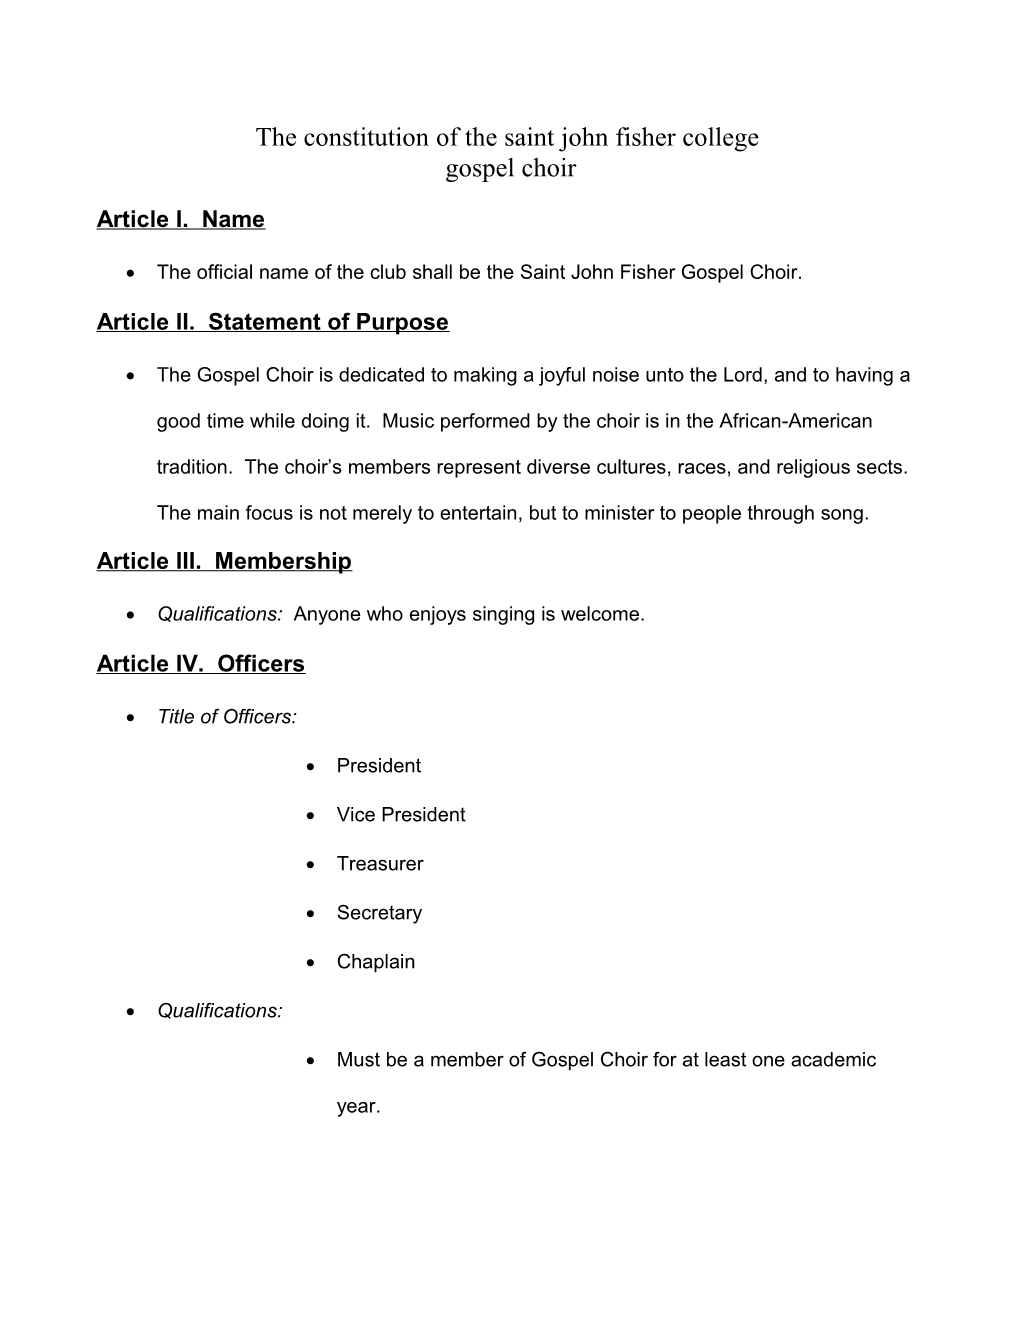 The Constitution of the Saint John Fisher College Gospel Choir